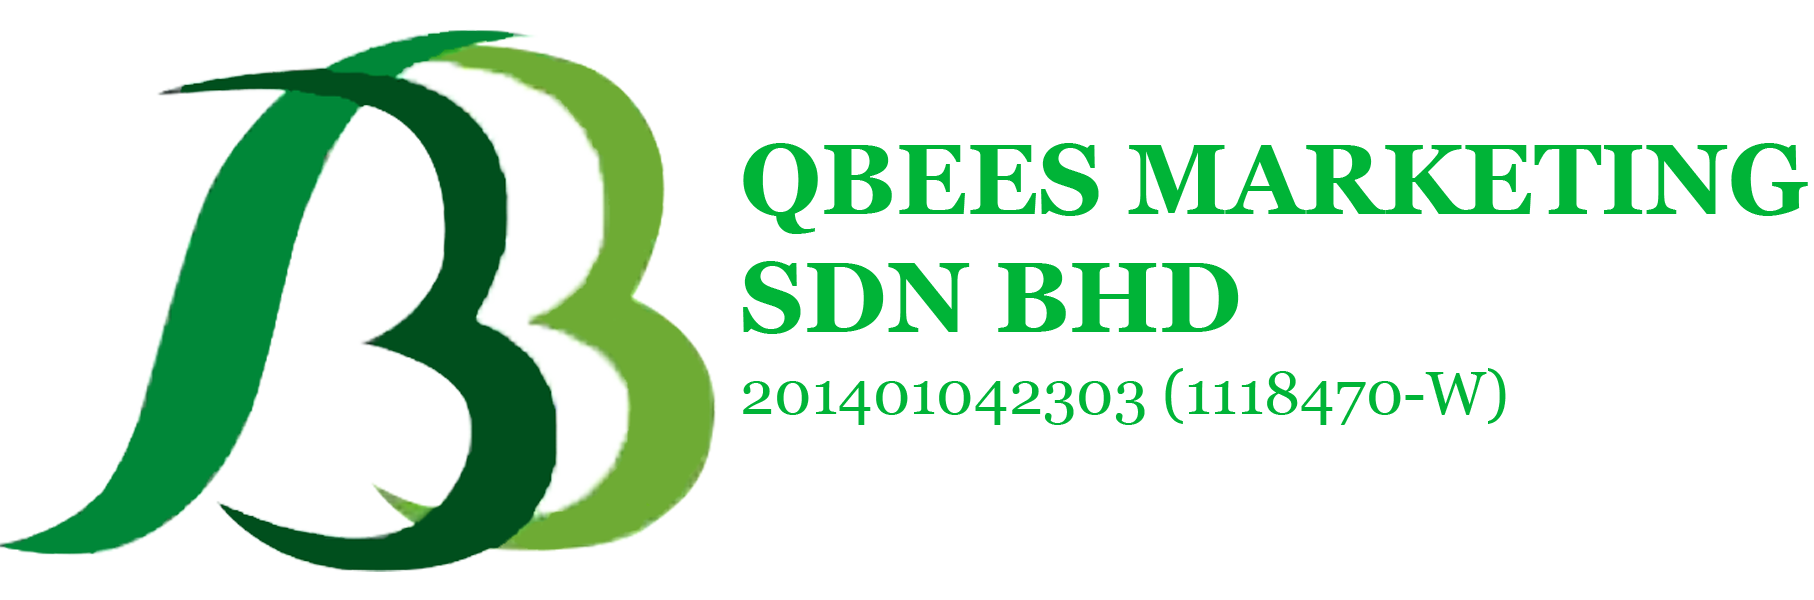 QBEES MARKETING SDN BHD